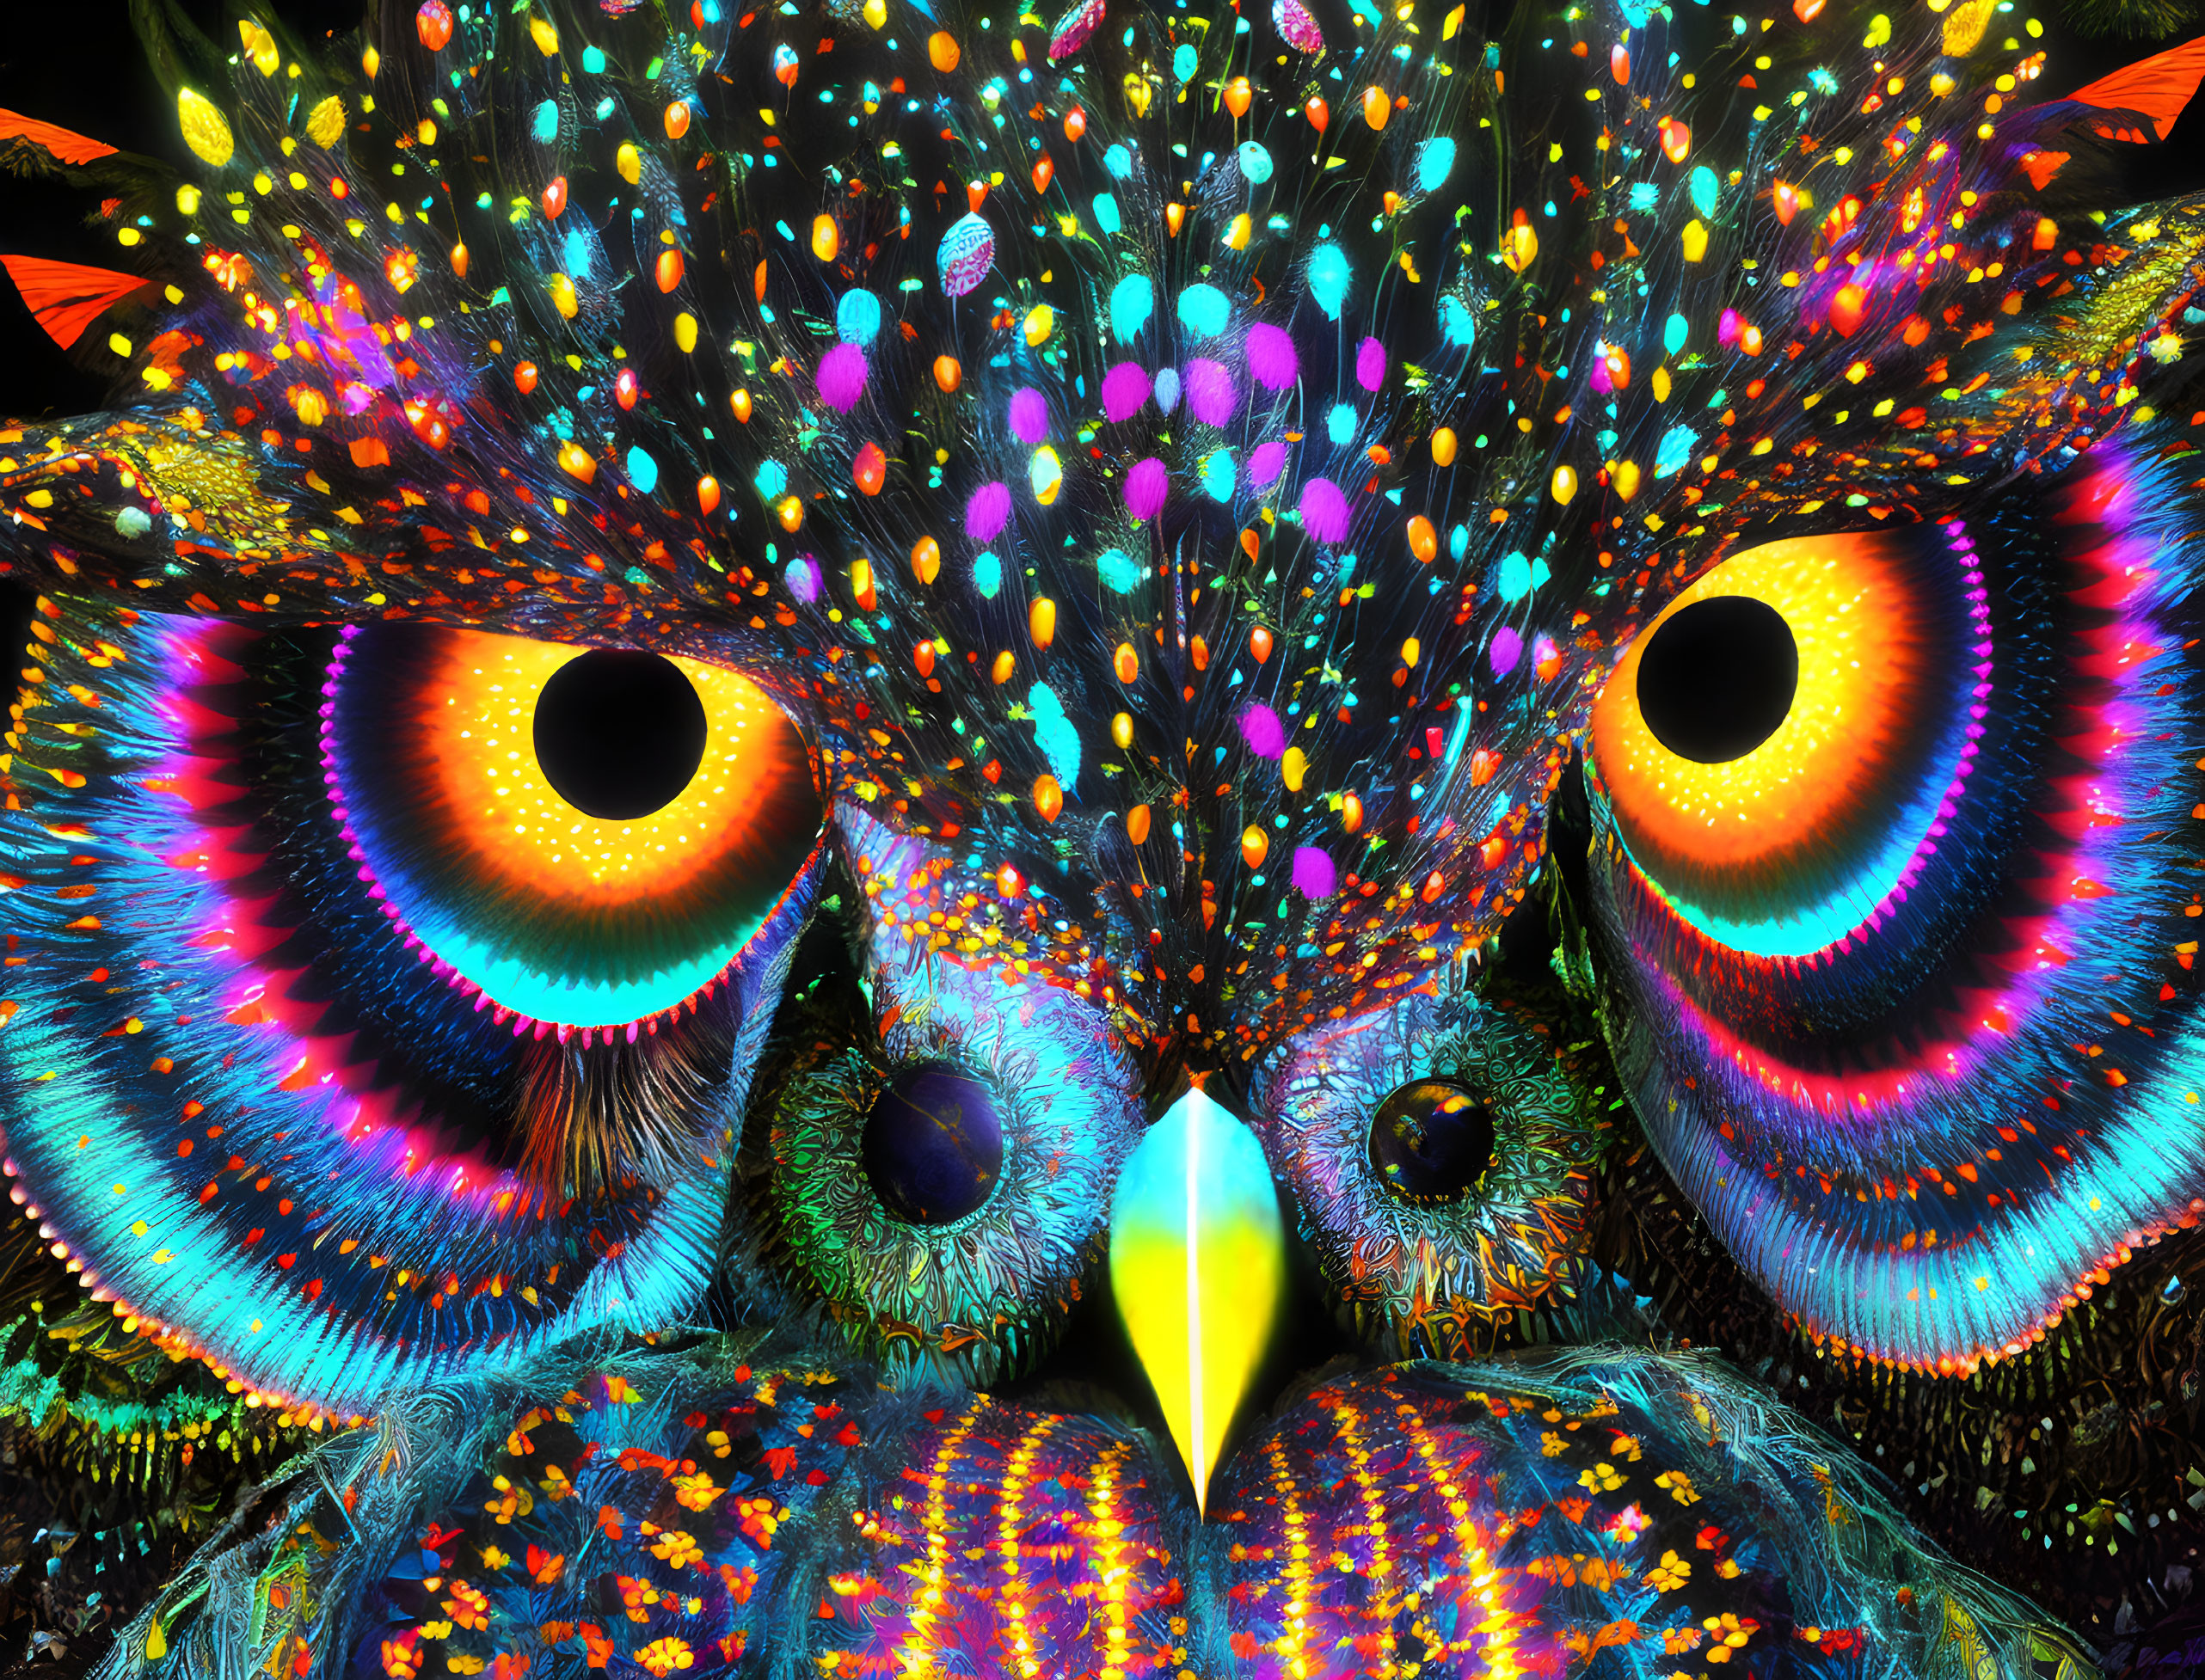 Owl of light